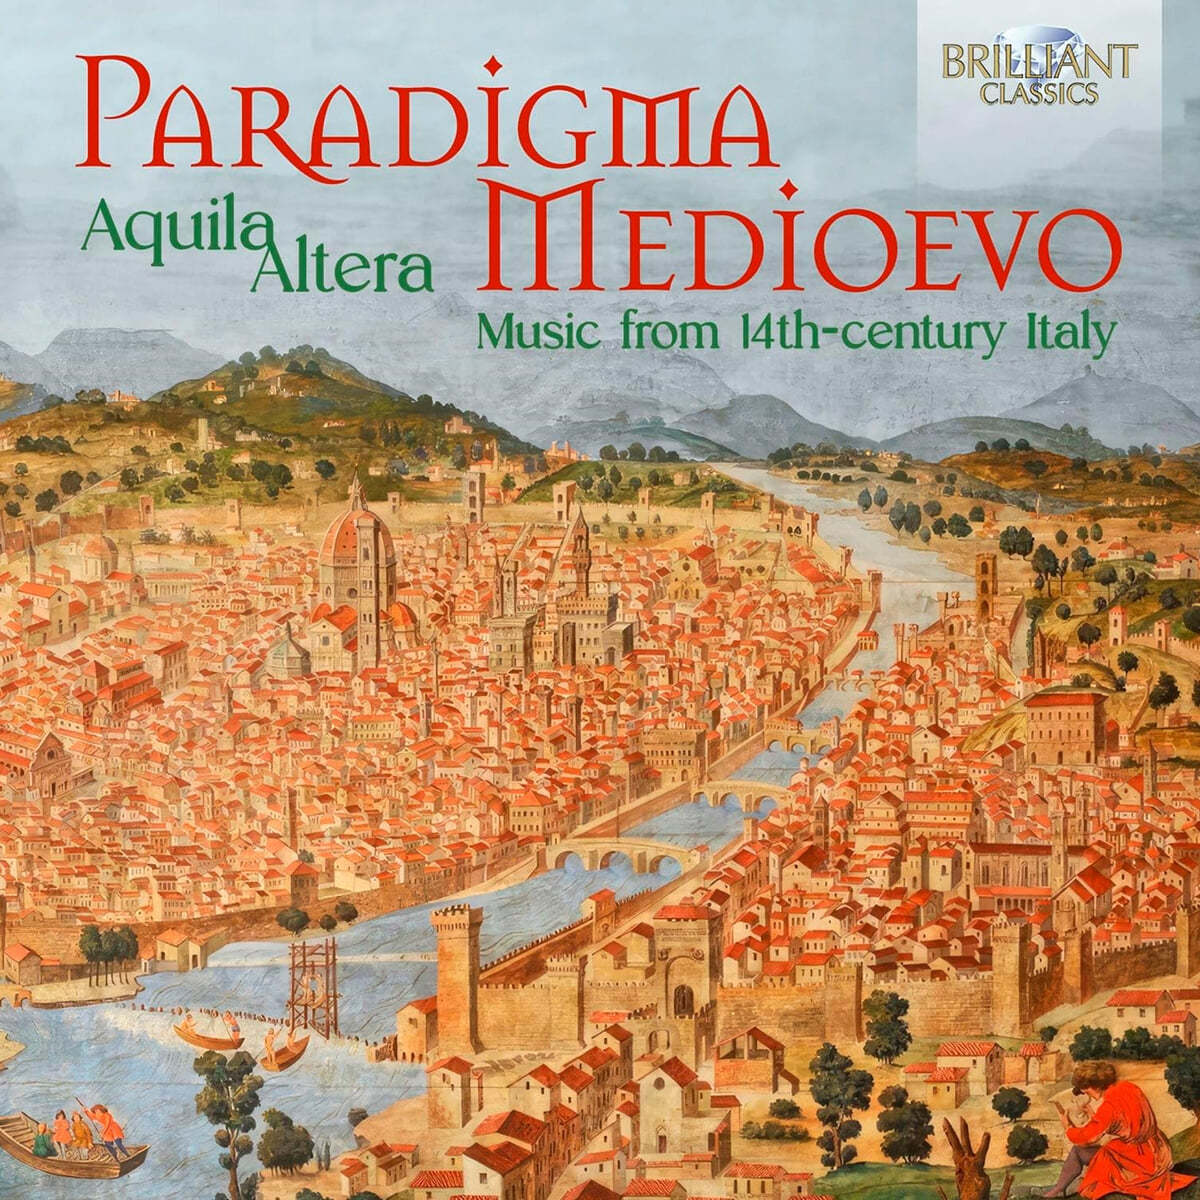 Aquila Altera 14세기 이탈리아 중세음악 모음집 (Paradigma Medioevo: Music from 14h-century Italy)